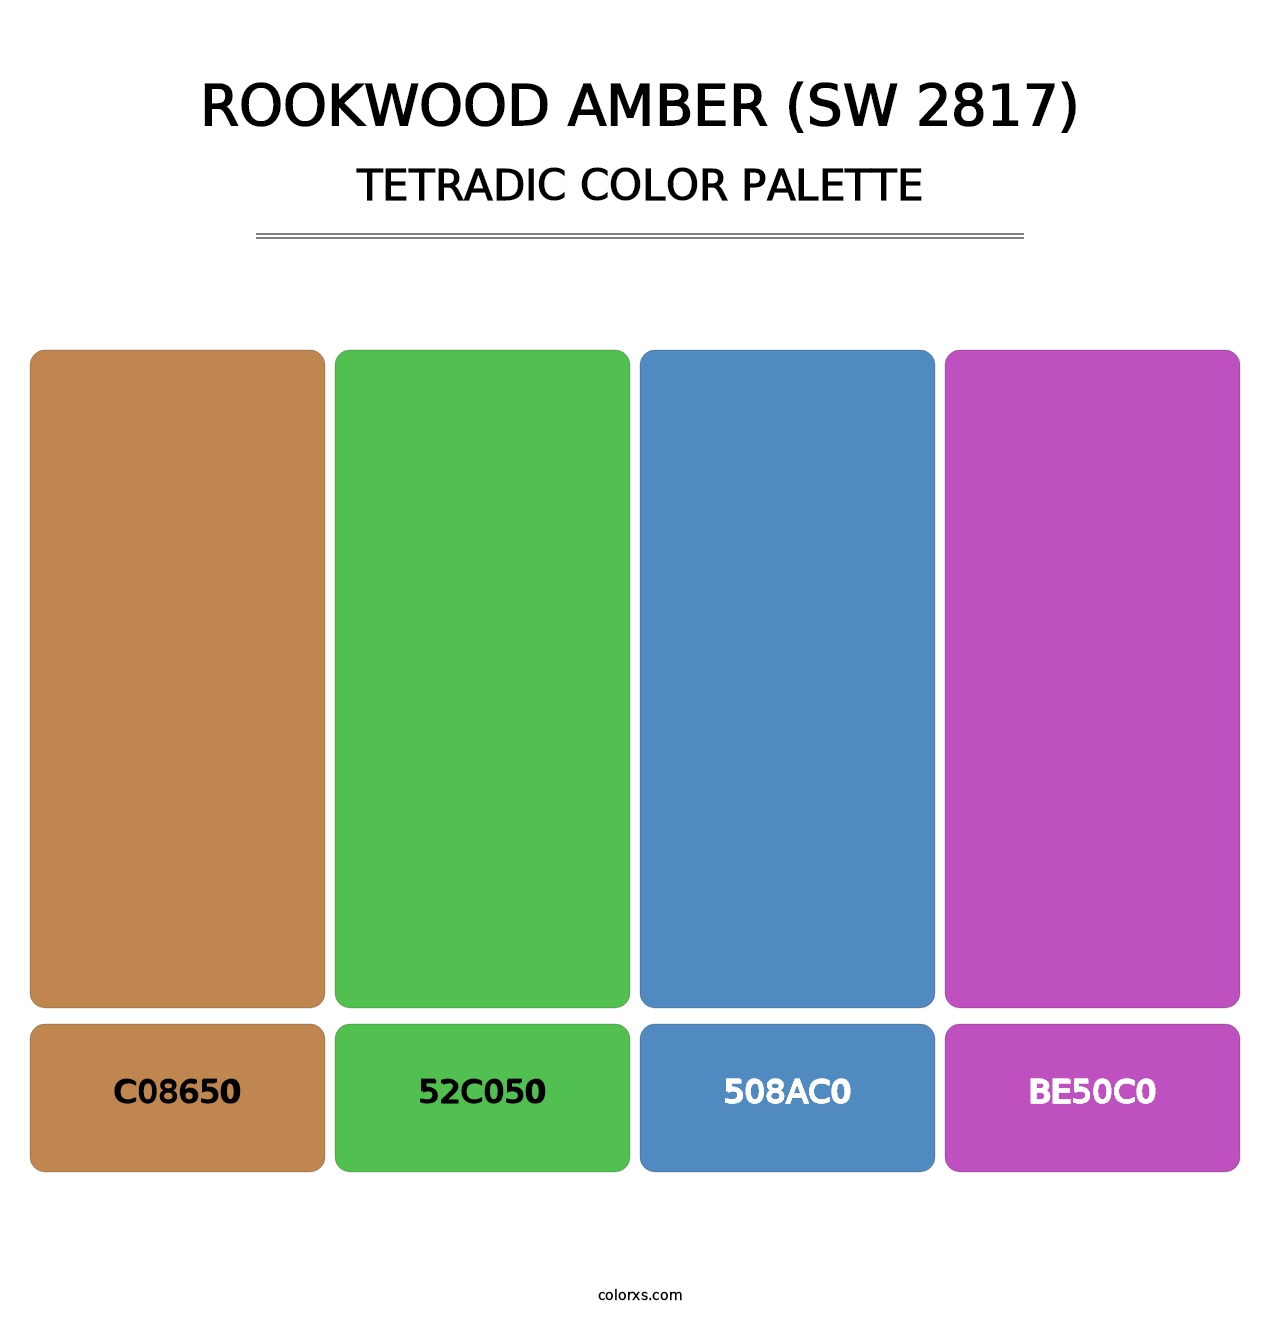 Rookwood Amber (SW 2817) - Tetradic Color Palette